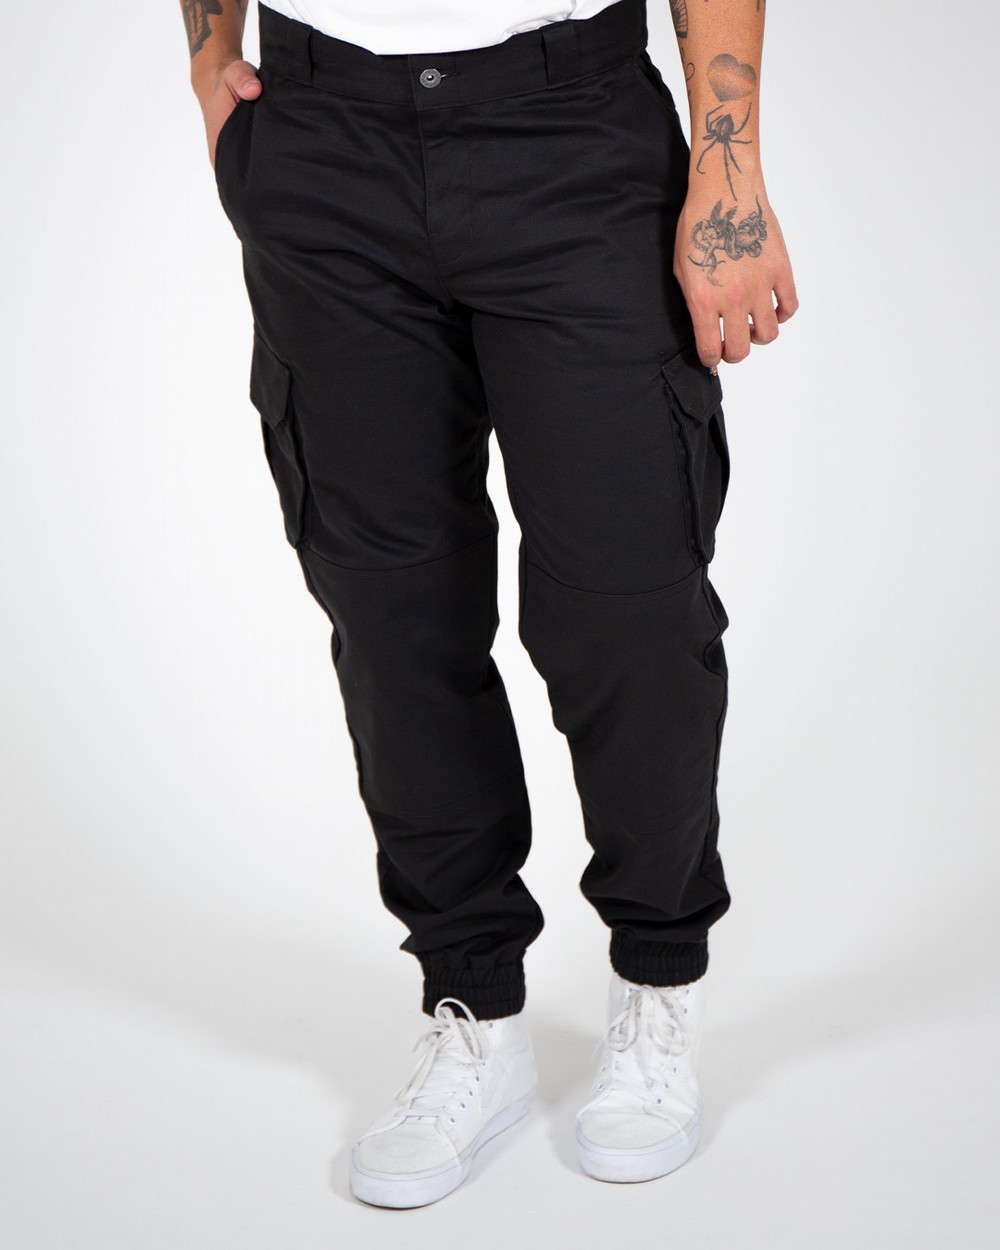 Hot Sale Men Black Hip Hop Cargo Pants Elastic Waist Jogger Trousers  Sweatpants Pockets Full Length Casual Fashion